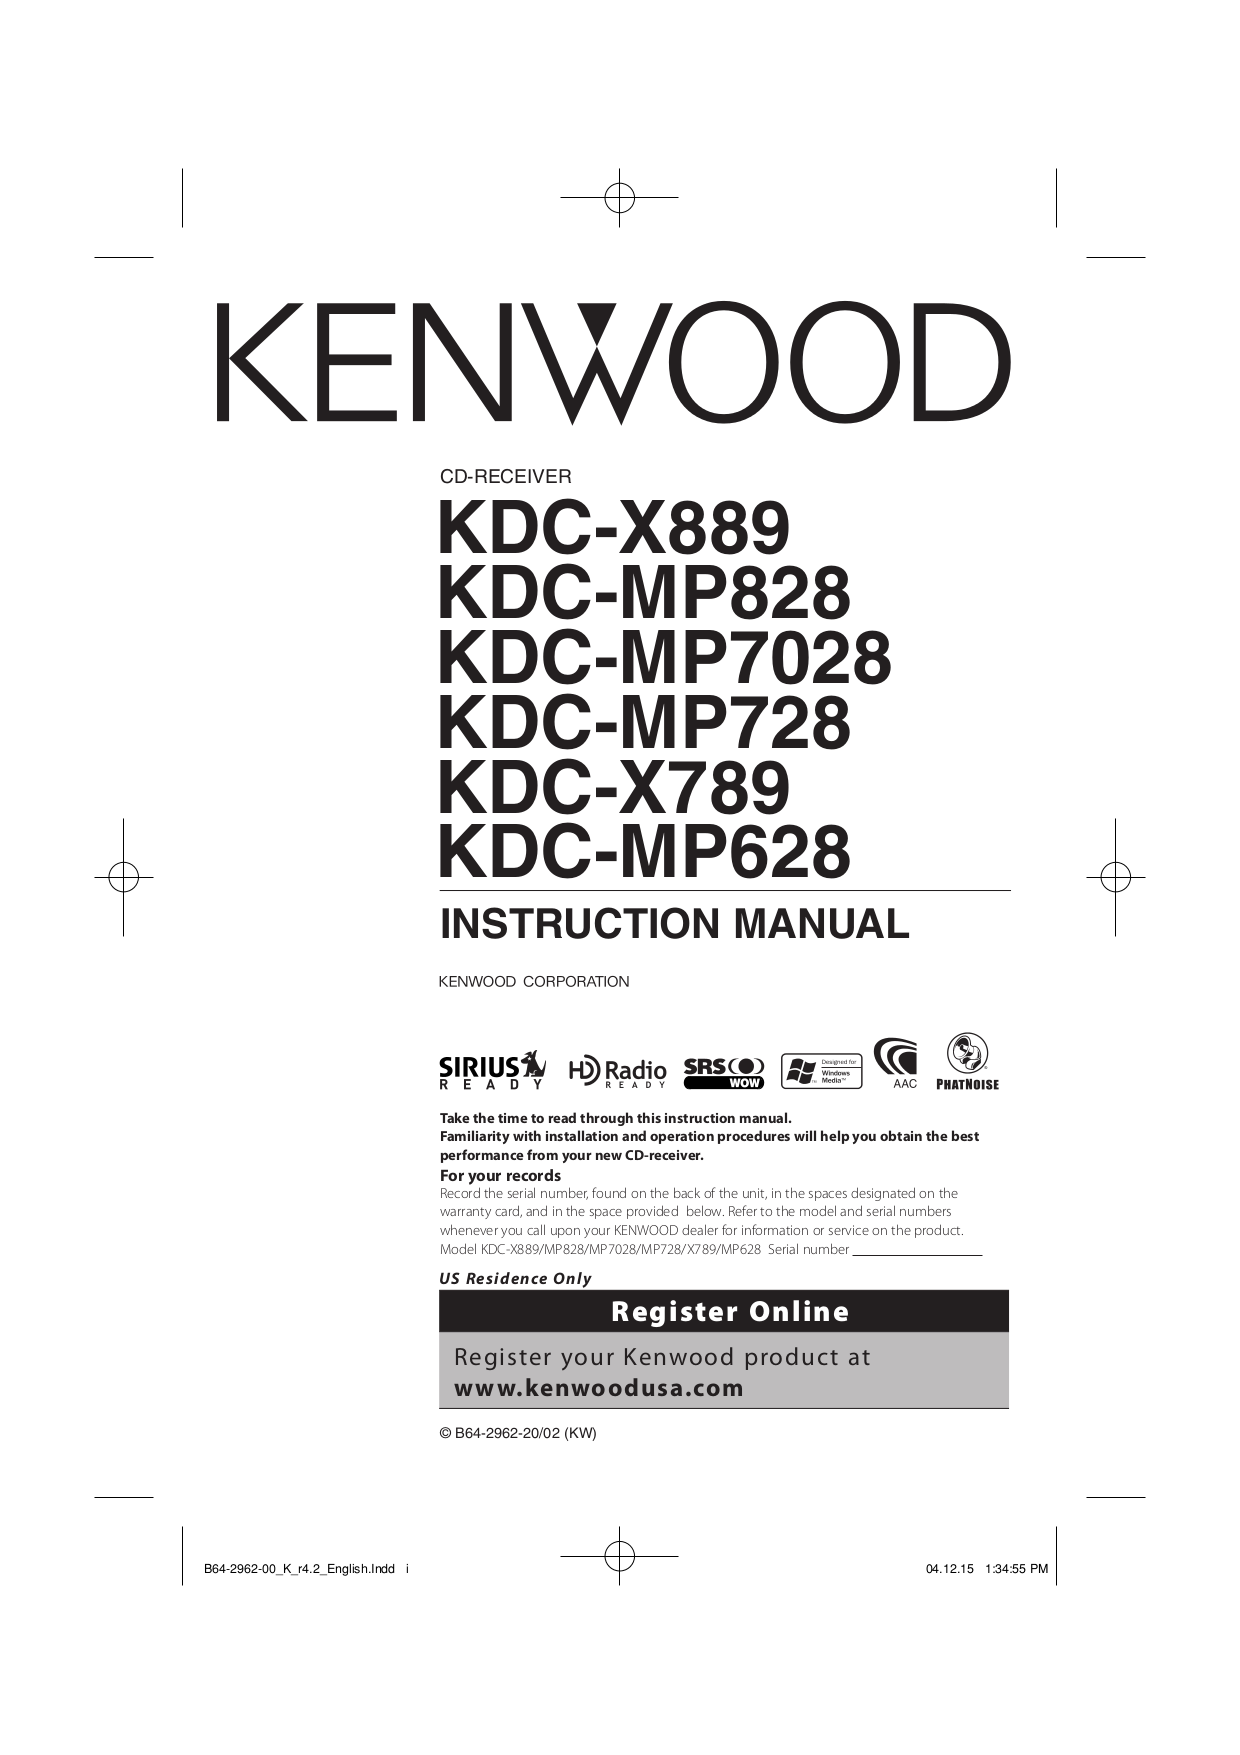 kenwood kdc bt955hd wiring diagram